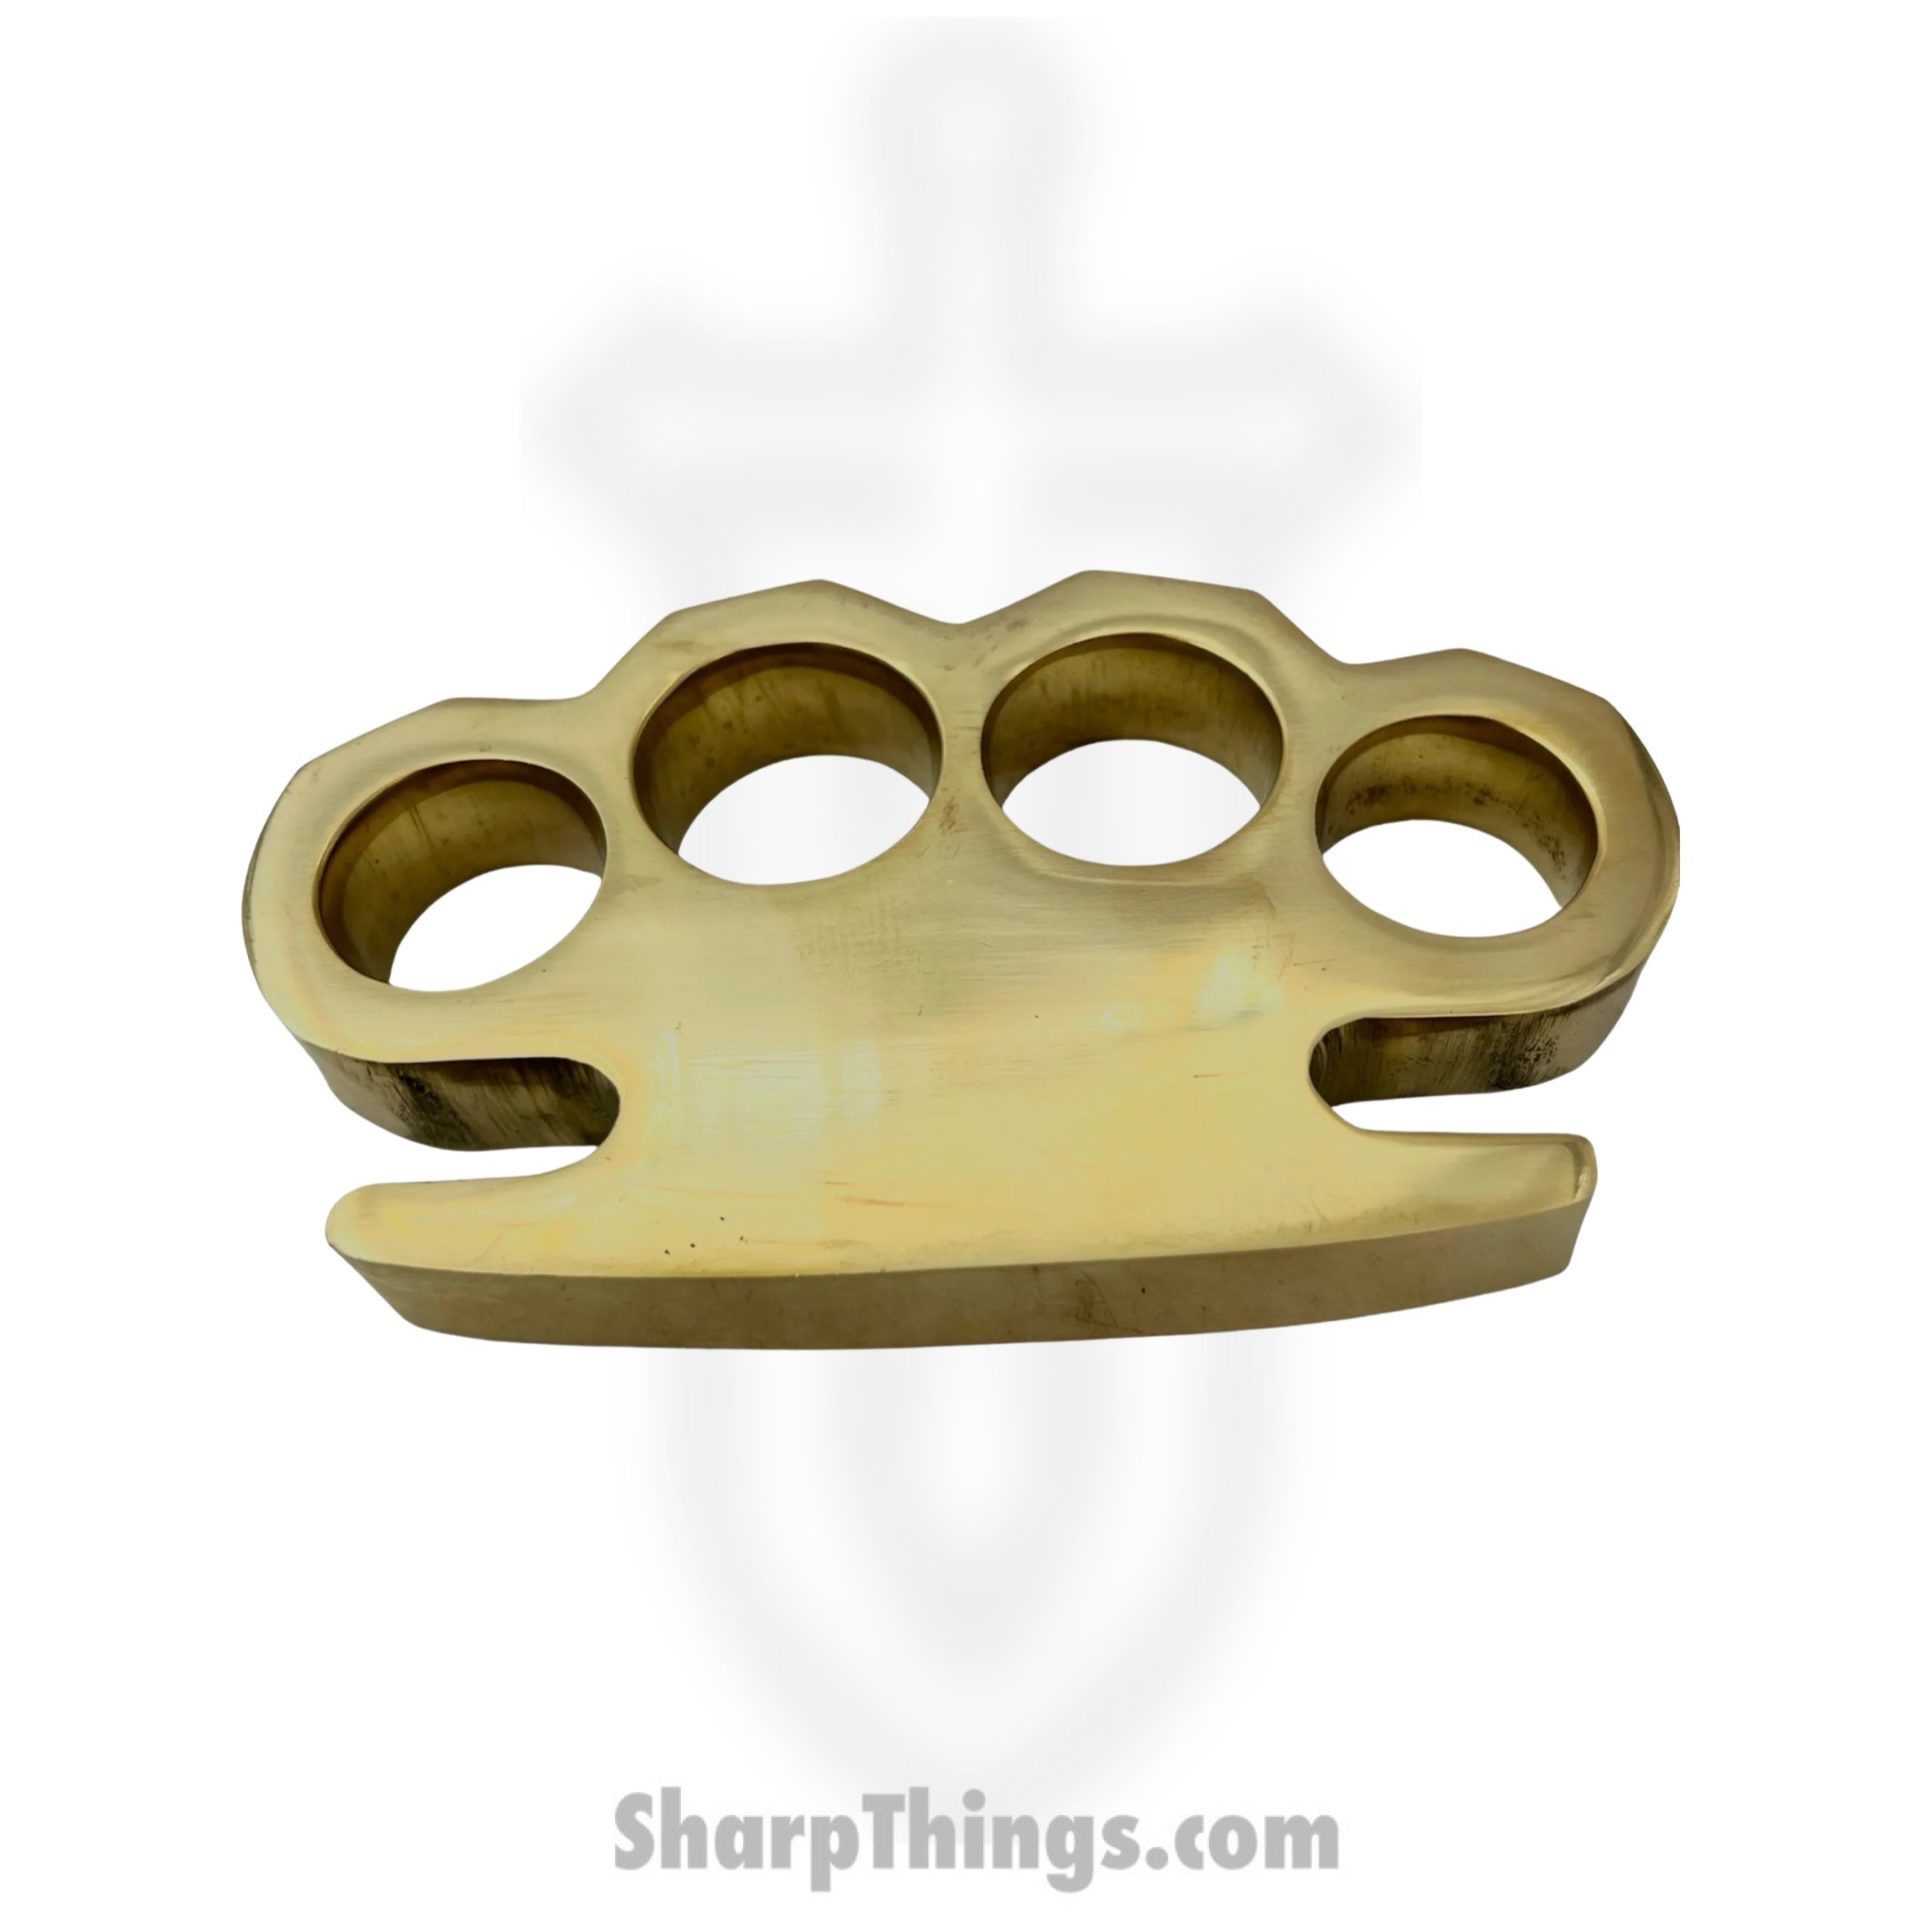 Pin on Sharp Stuff & Knucks, sharp brass knuckles - abadis-co.com